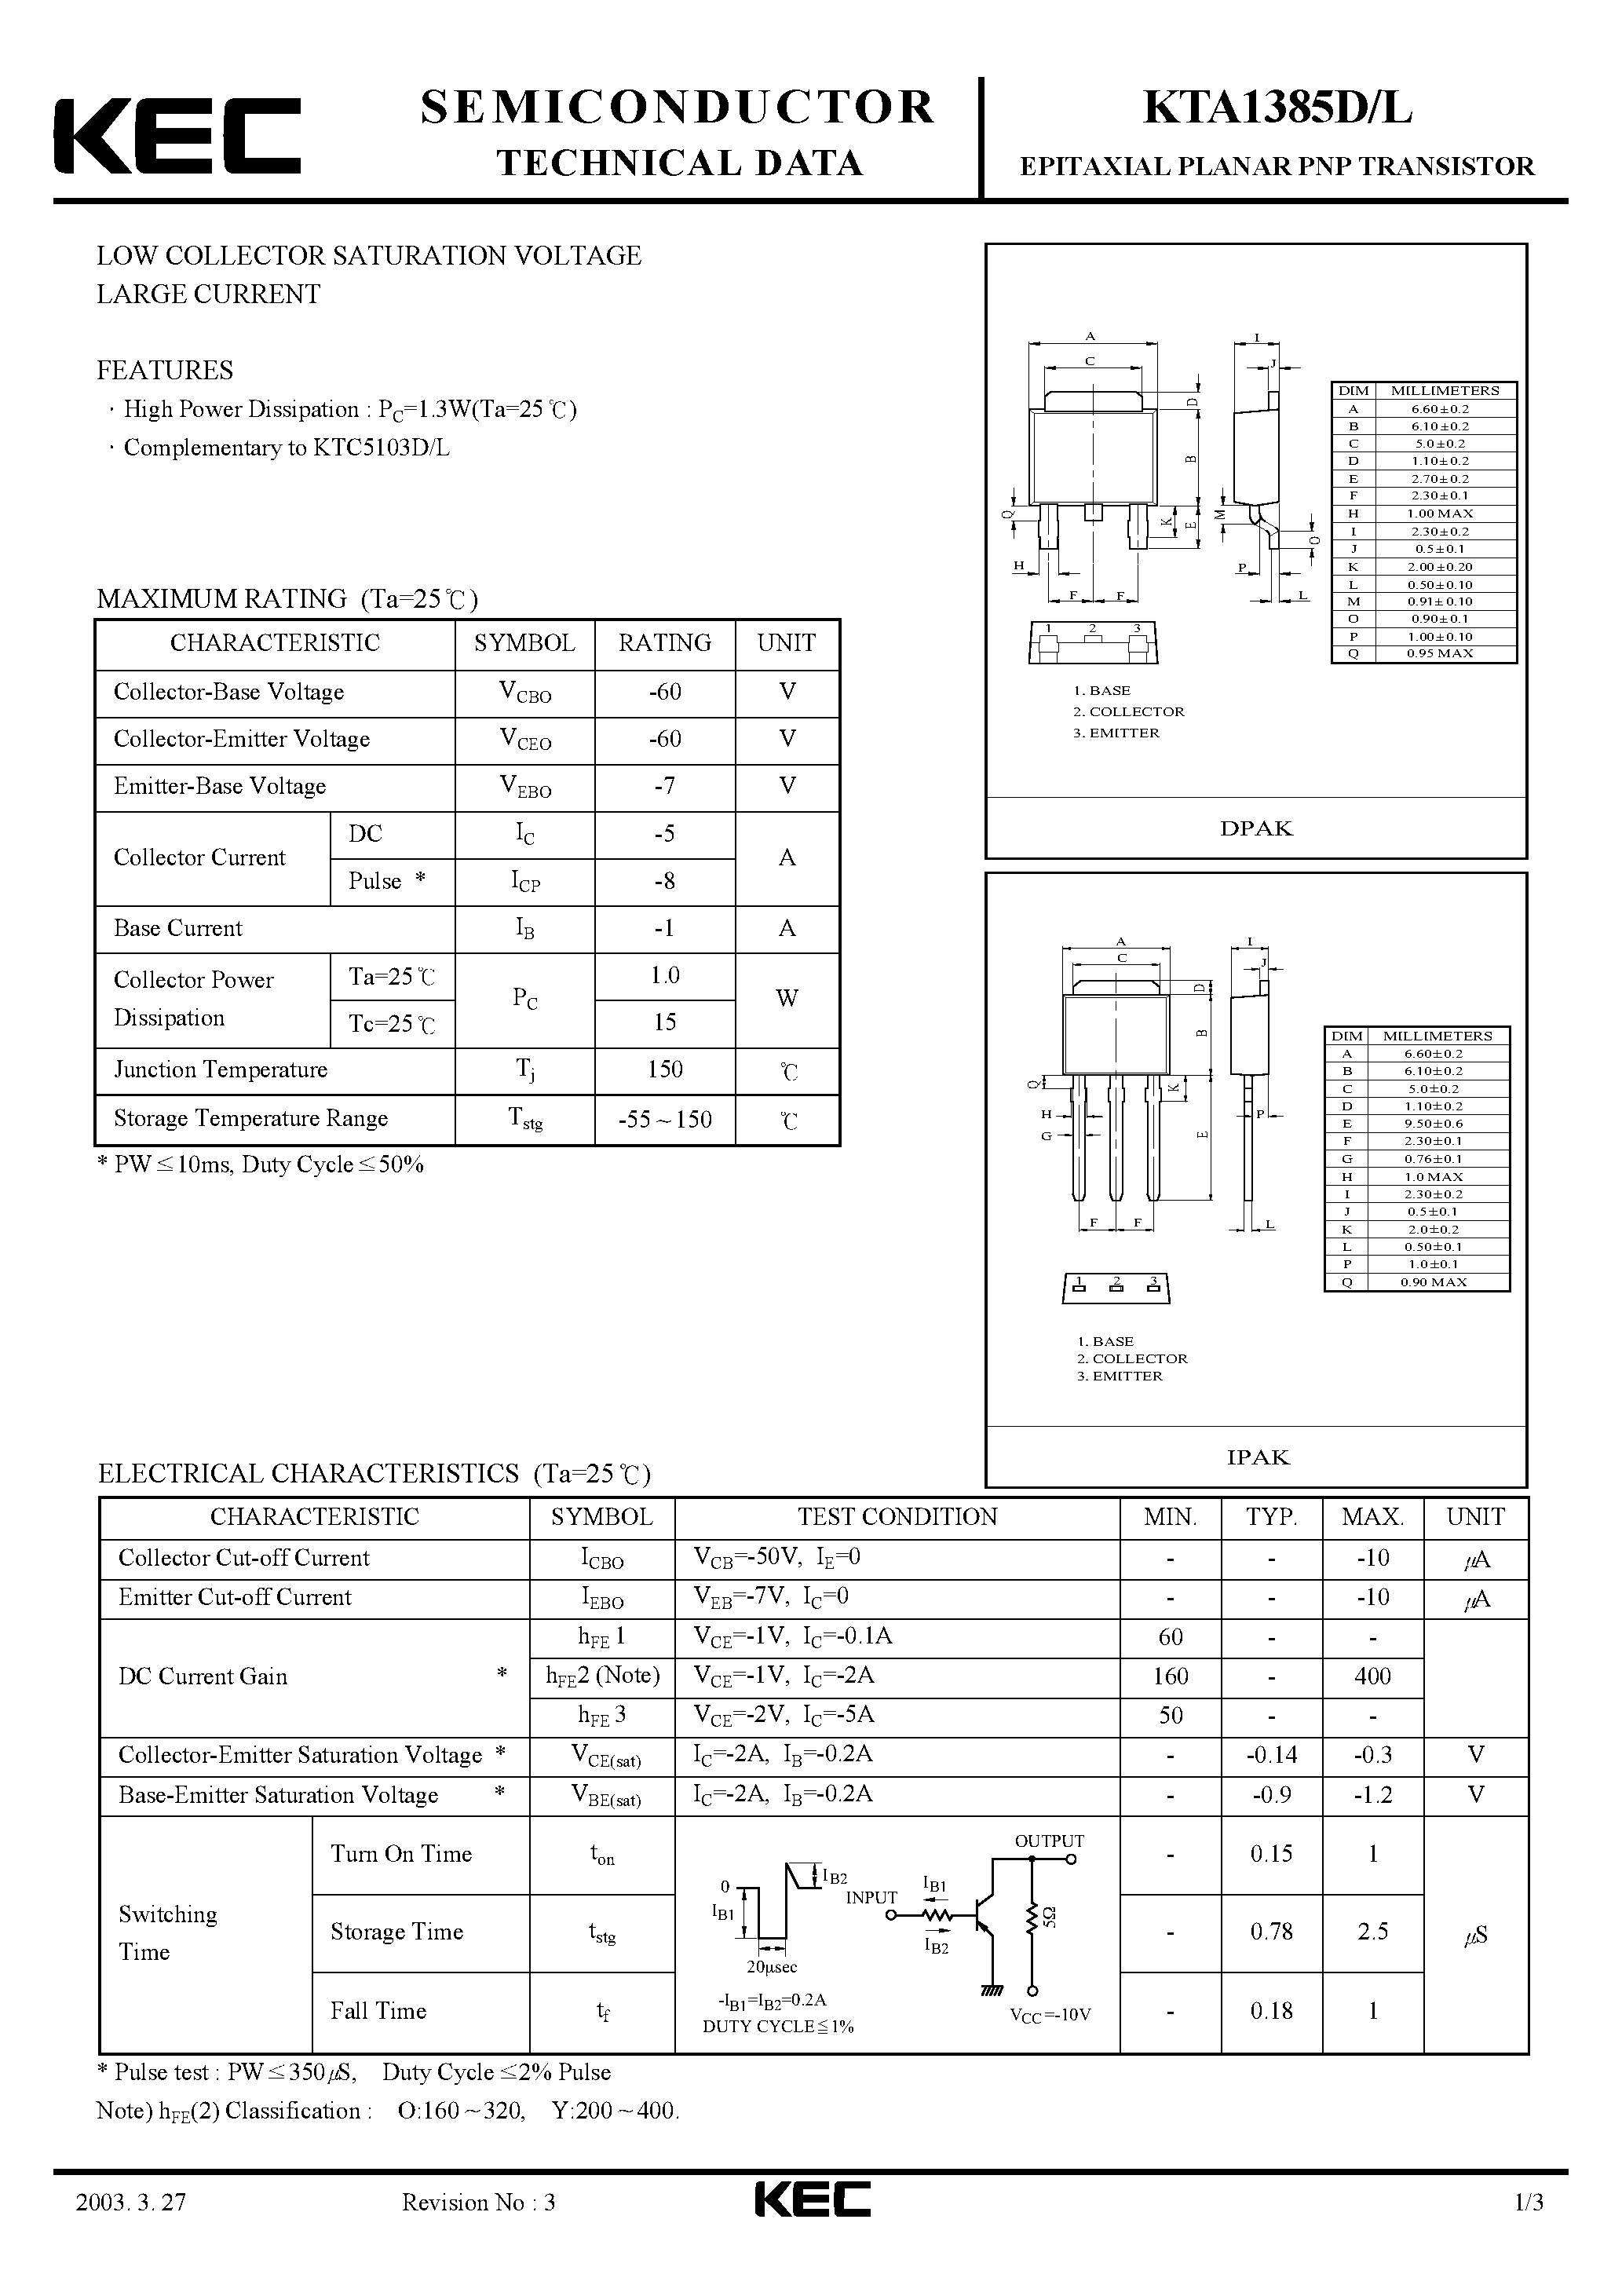 Datasheet KTA1385D - EPITAXIAL PLANAR PNP TRANSISTOR (LOW COLLECTOR SATURATION VOLTAGE LARGE CURRENT) page 1